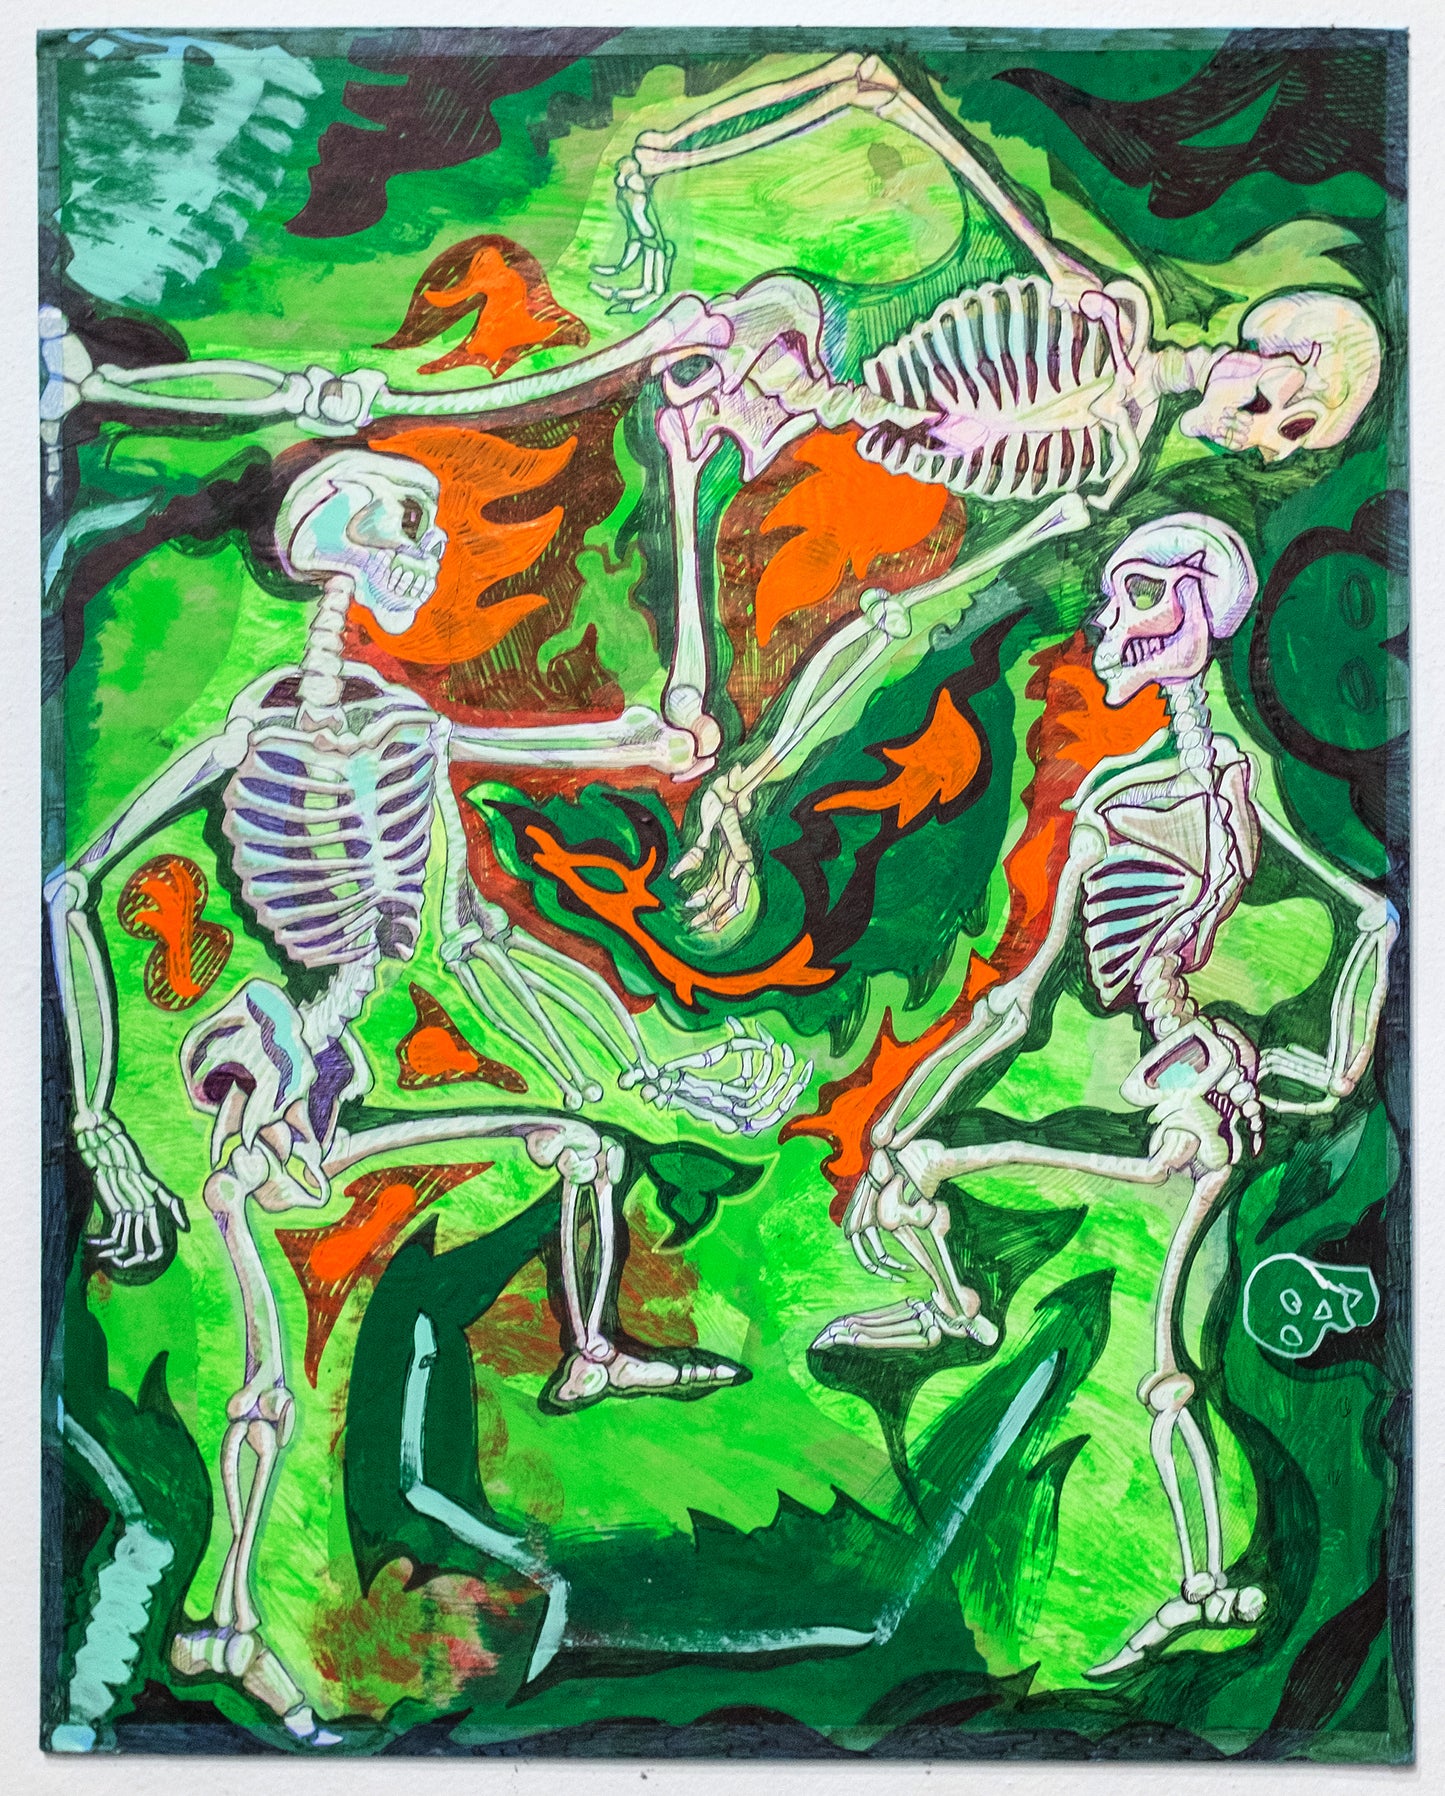 Dancing Bones by Zack Luchetti